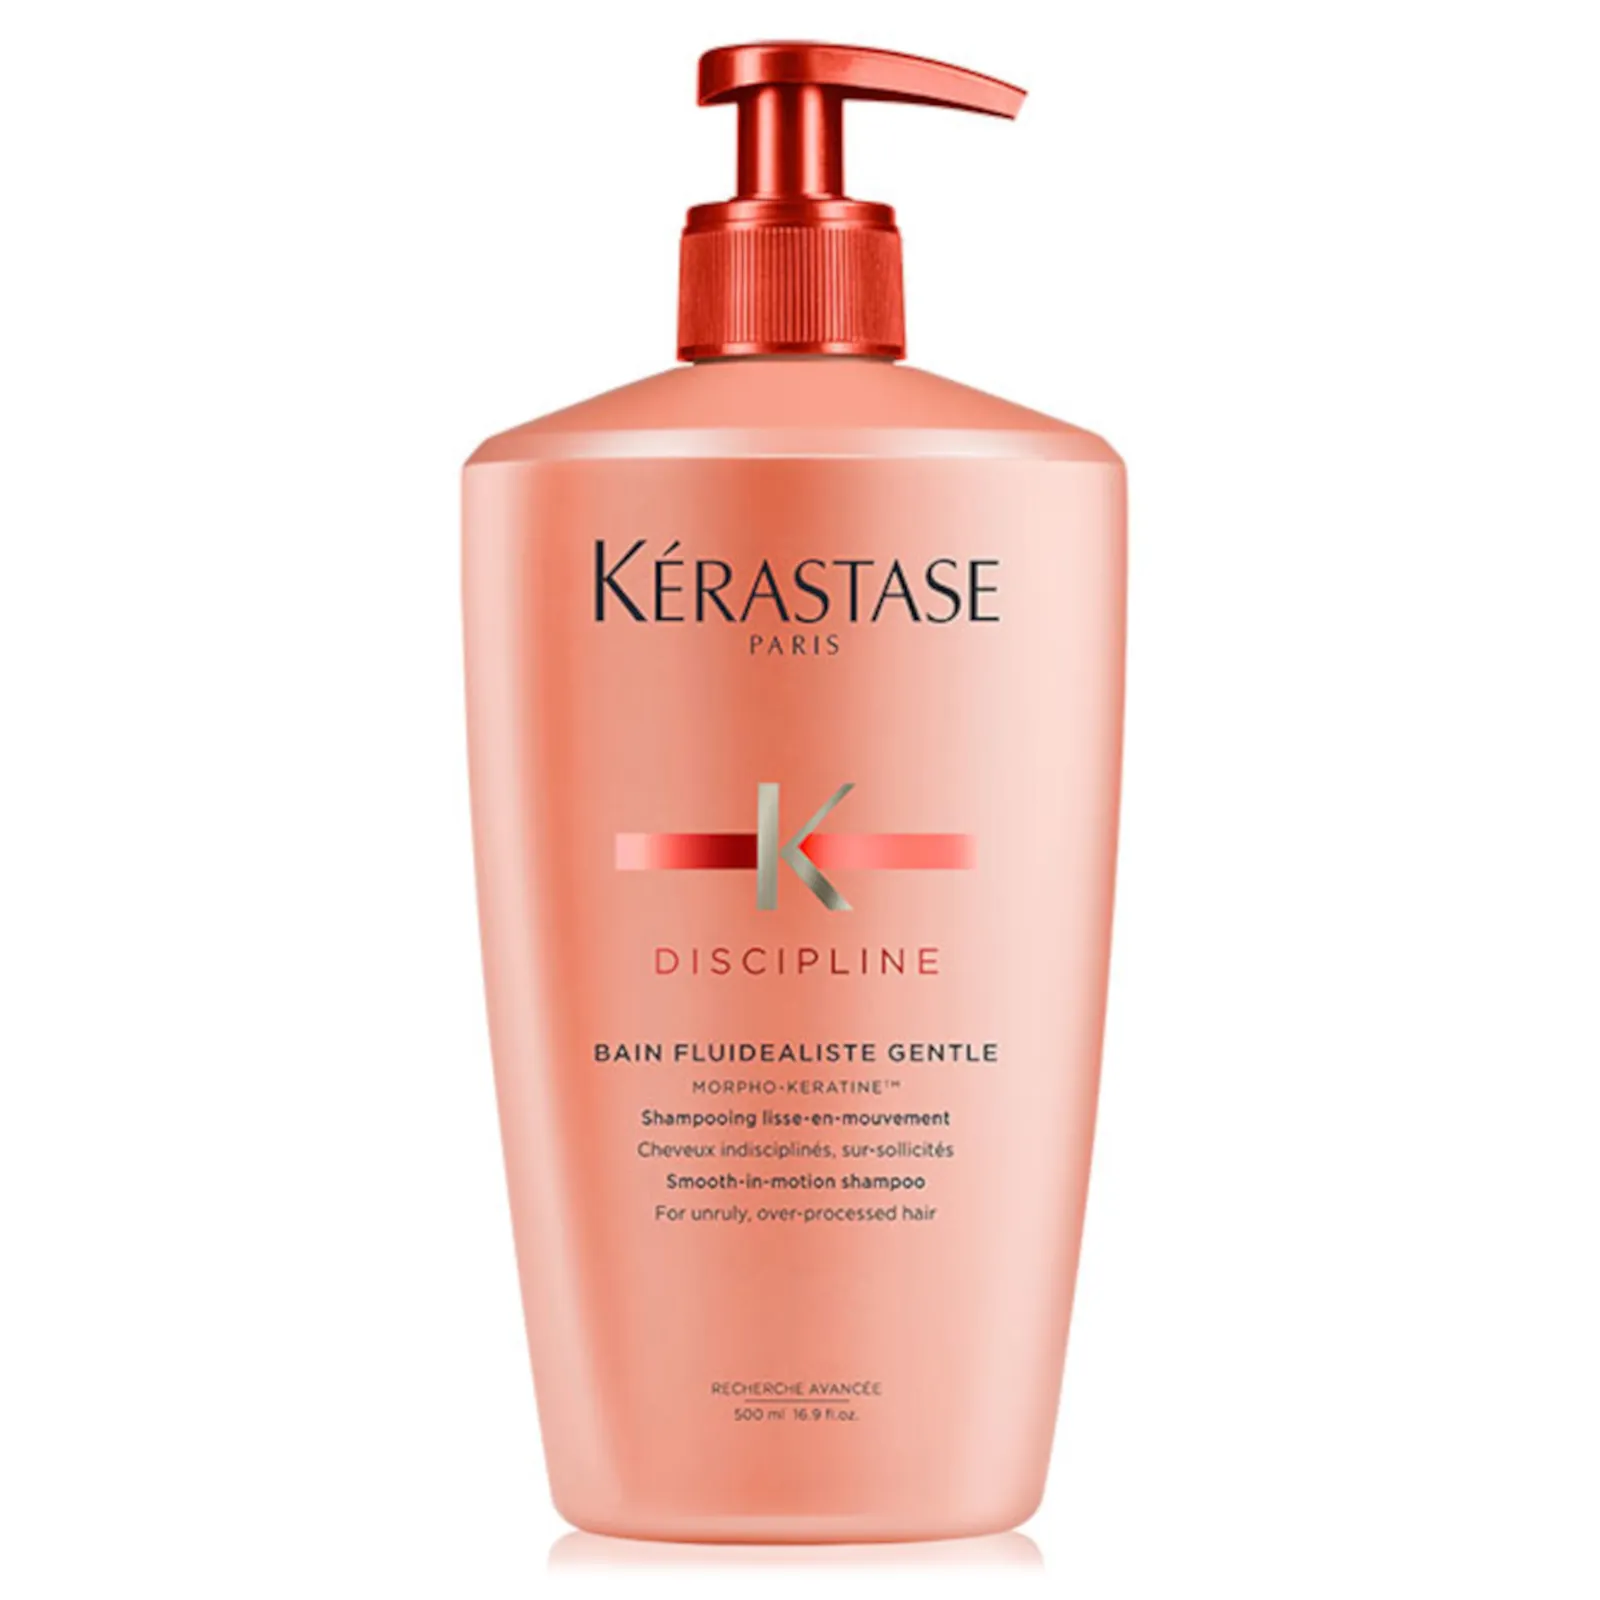 kerastase discipline szampon 500ml